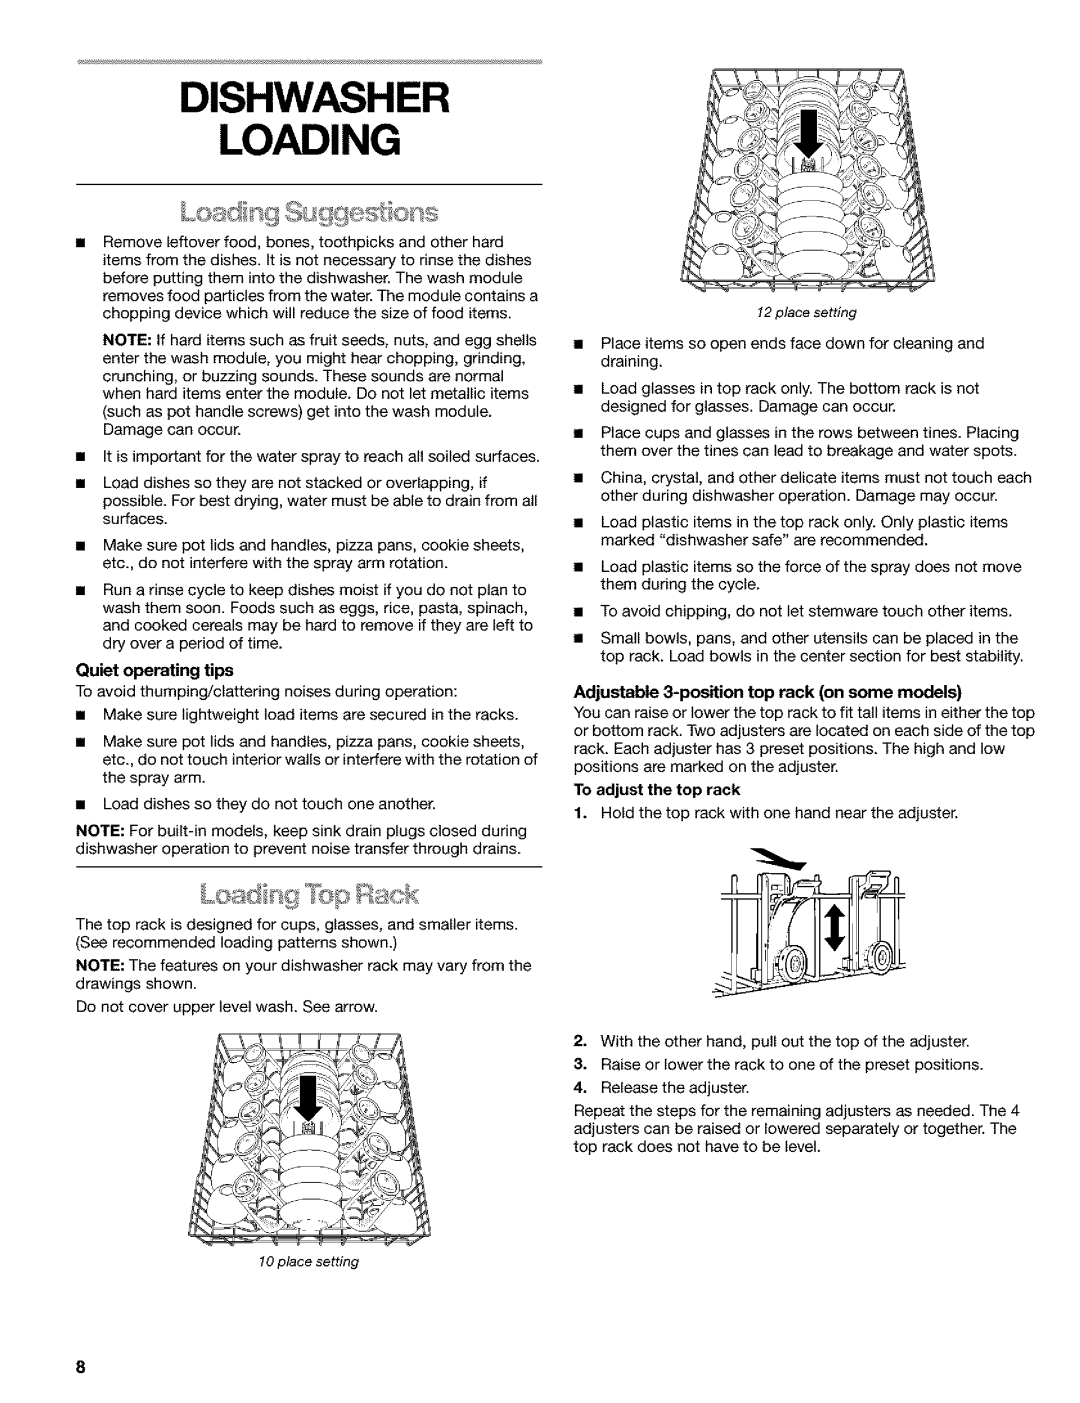 Kenmore 665.16529, 665.15522 manual Dishwasher Loading, Quiet operating tips, Adjustable 3-positiontop rack on some models 